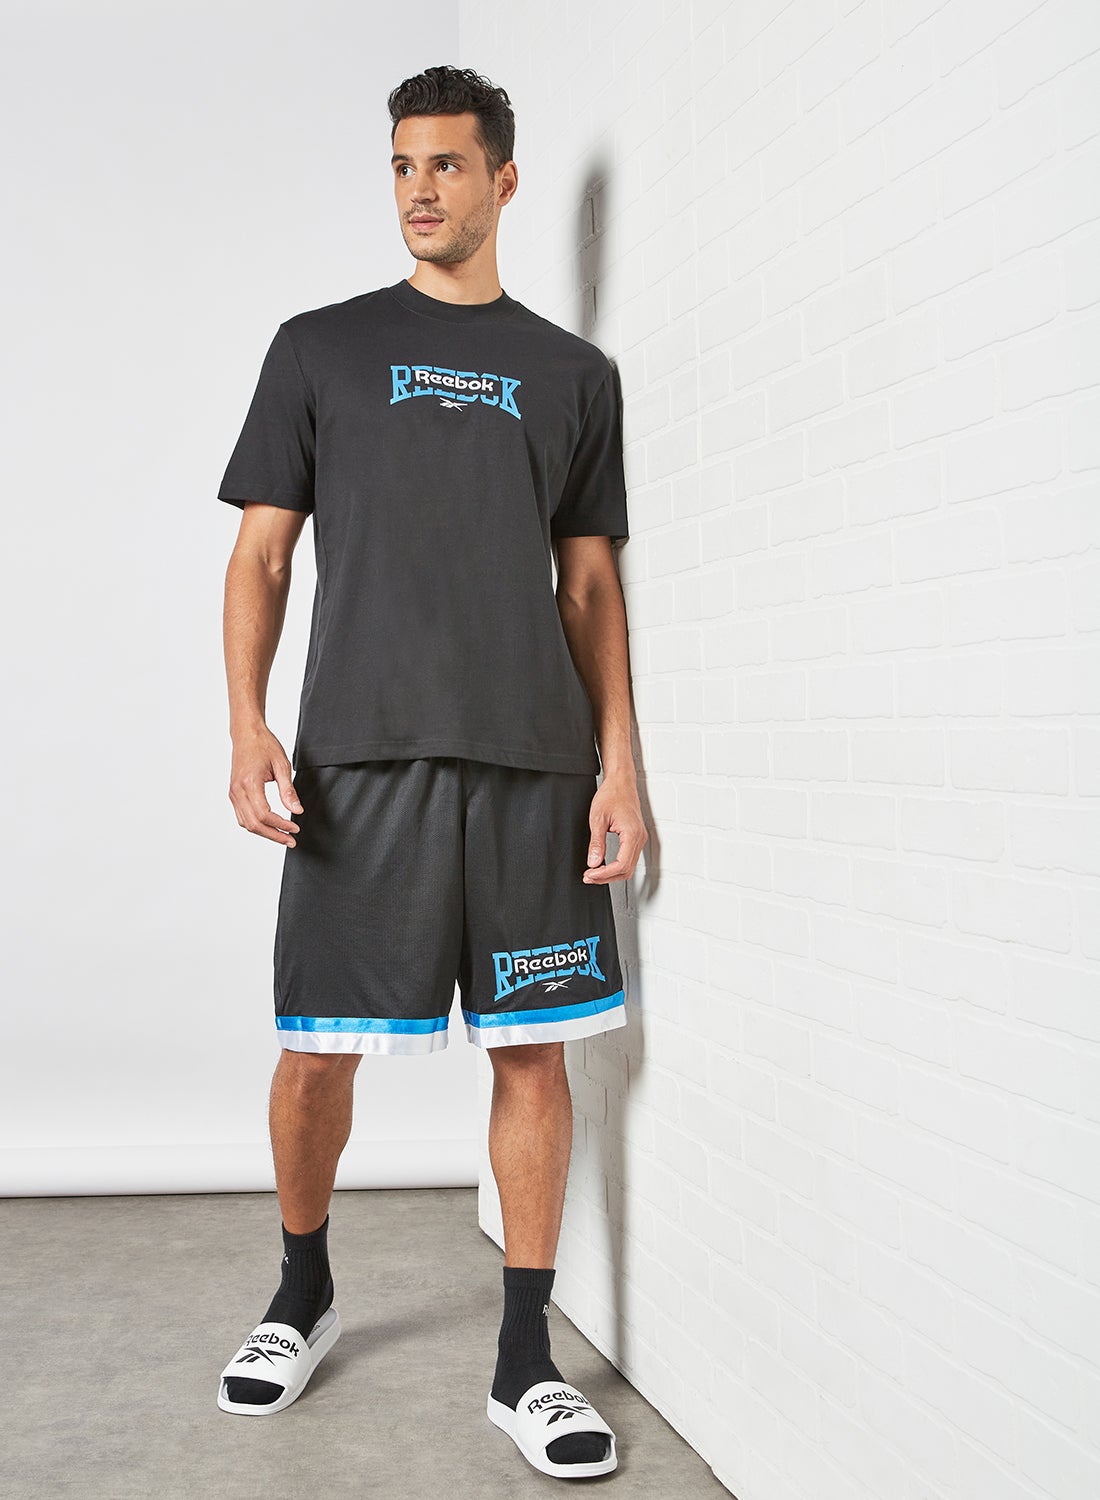 Classic Basketball Shorts Black 